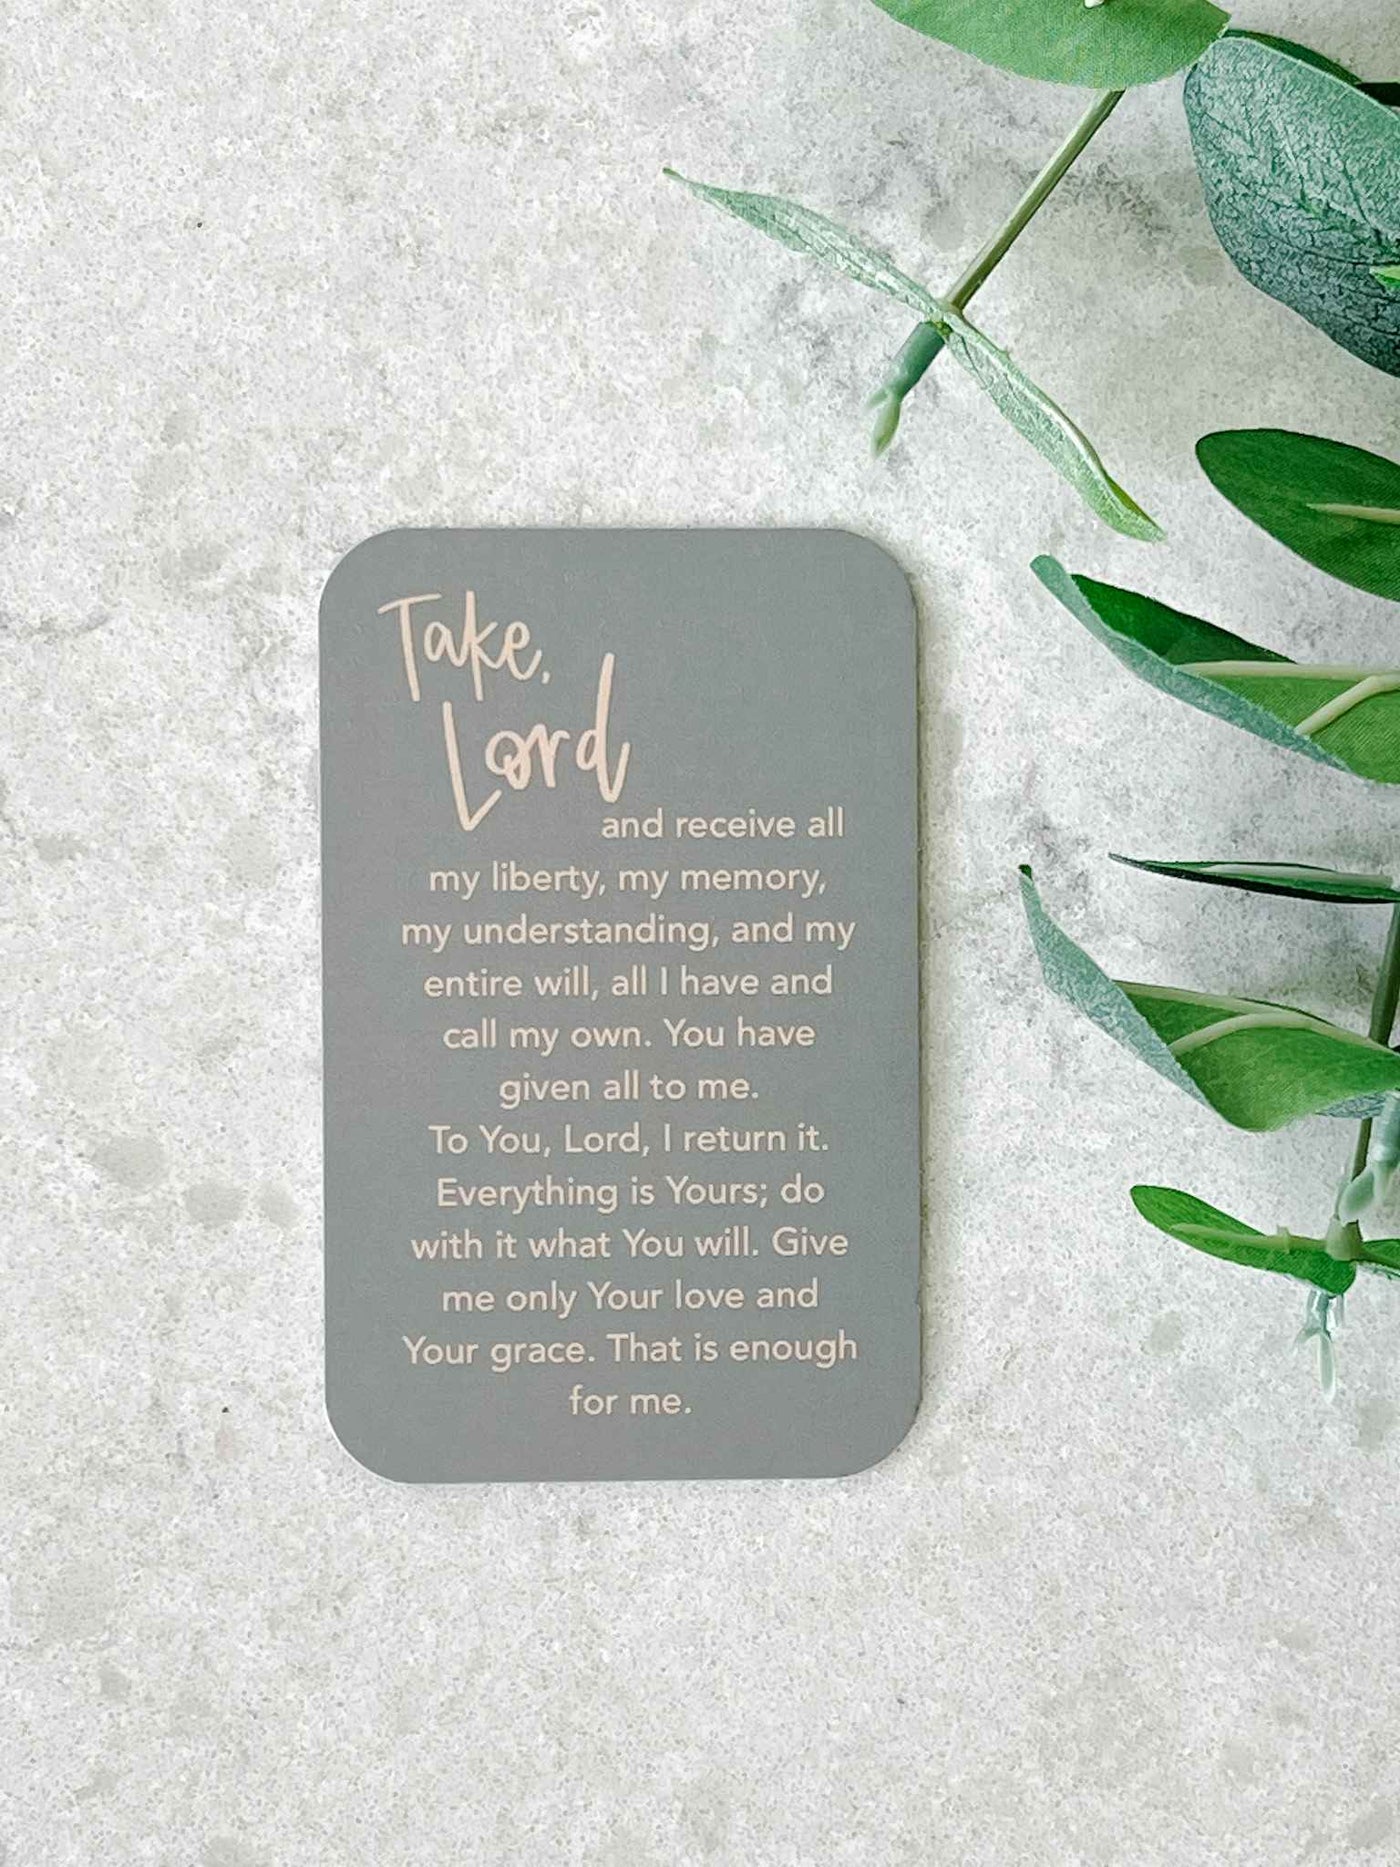 Sucipe - Prayer Card